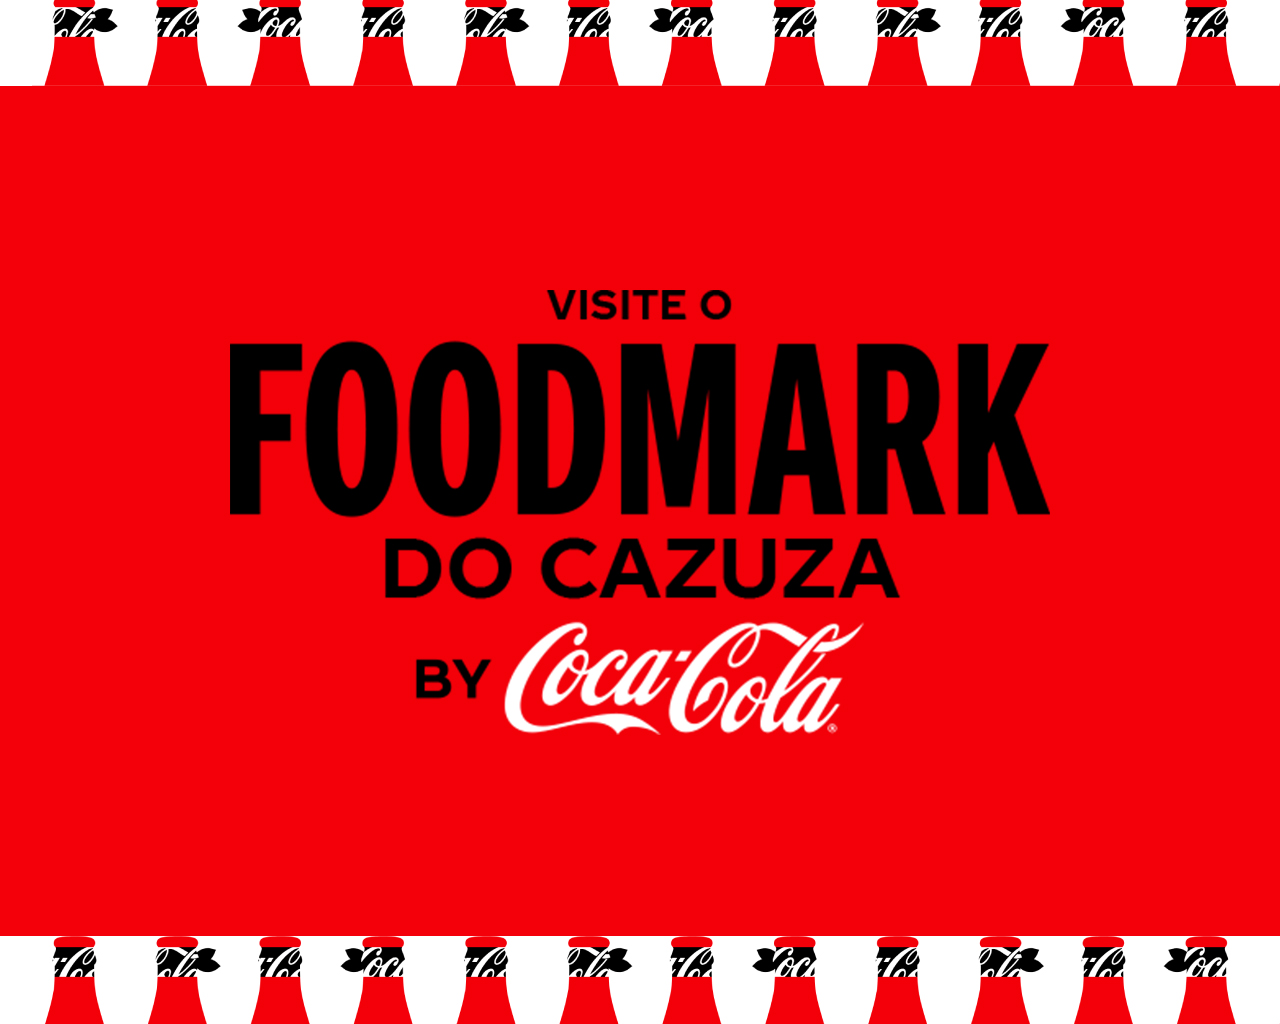 Explore o Foodmark do Cazuza patrocinado pela Coca-Cola.